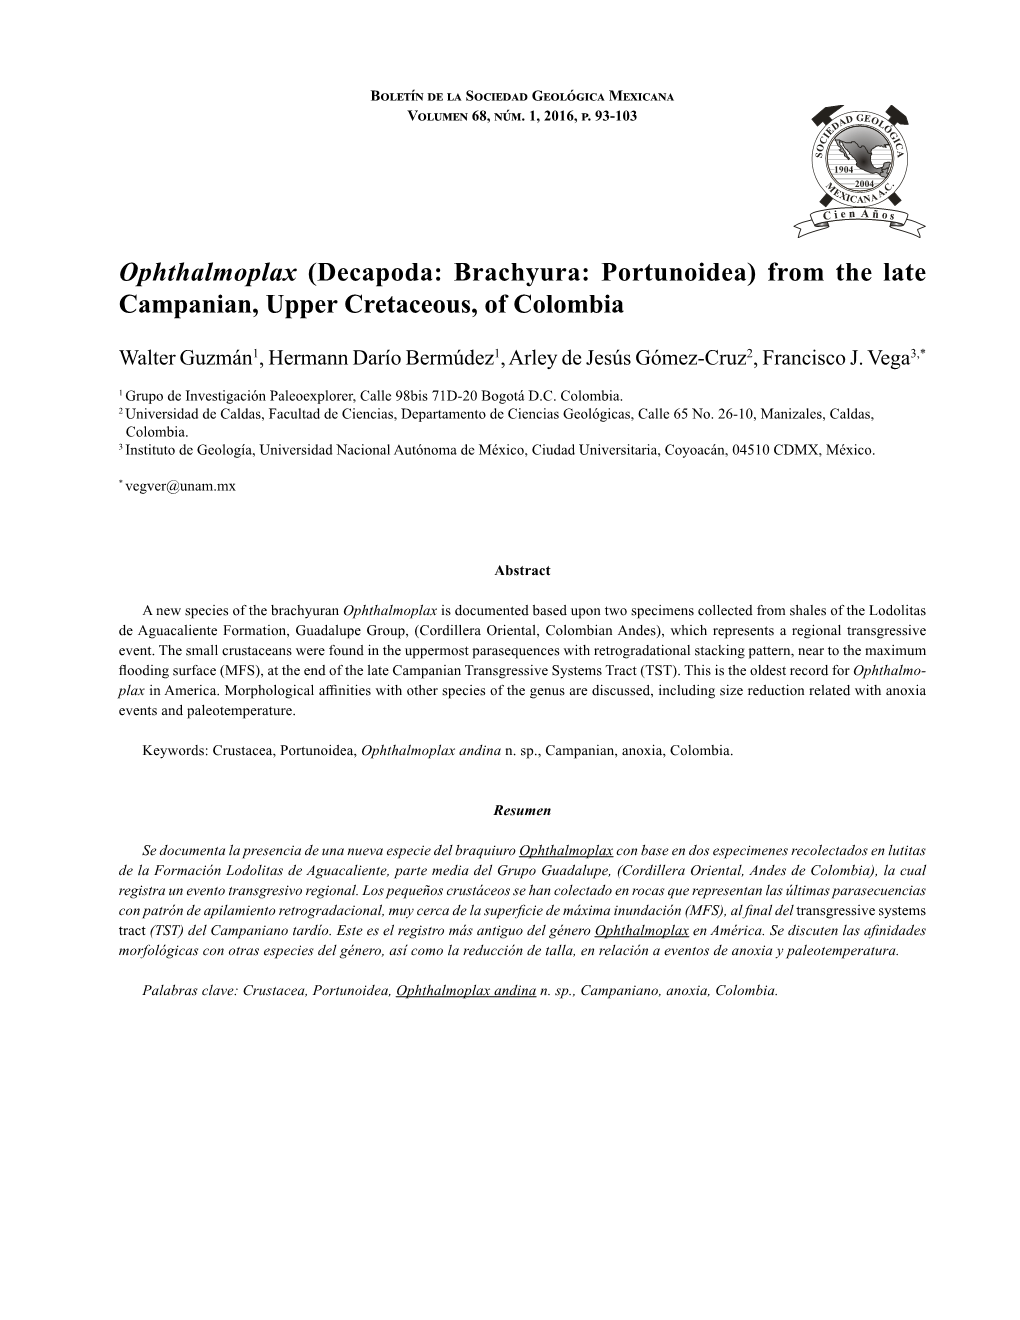 Ophthalmoplax (Decapoda: Brachyura: Portunoidea) from the Late Campanian, Upper Cretaceous, of Colombia 93 Boletín De La Sociedad Geológica Mexicana